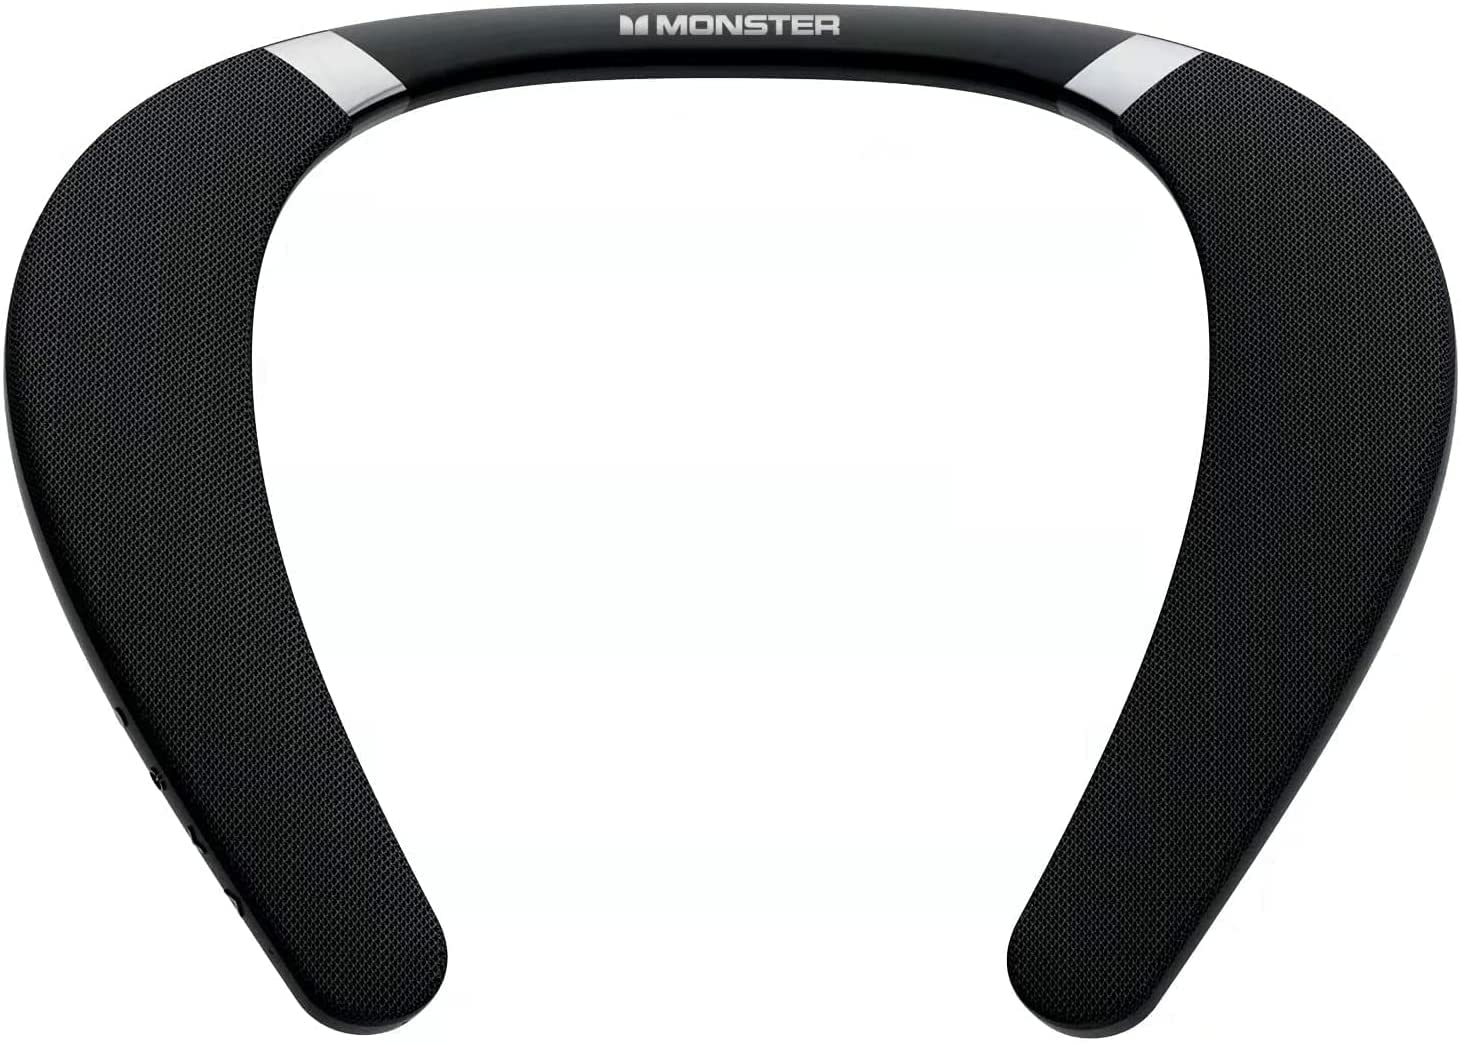 Monster Boomerang Neckband Bluetooth Speakers